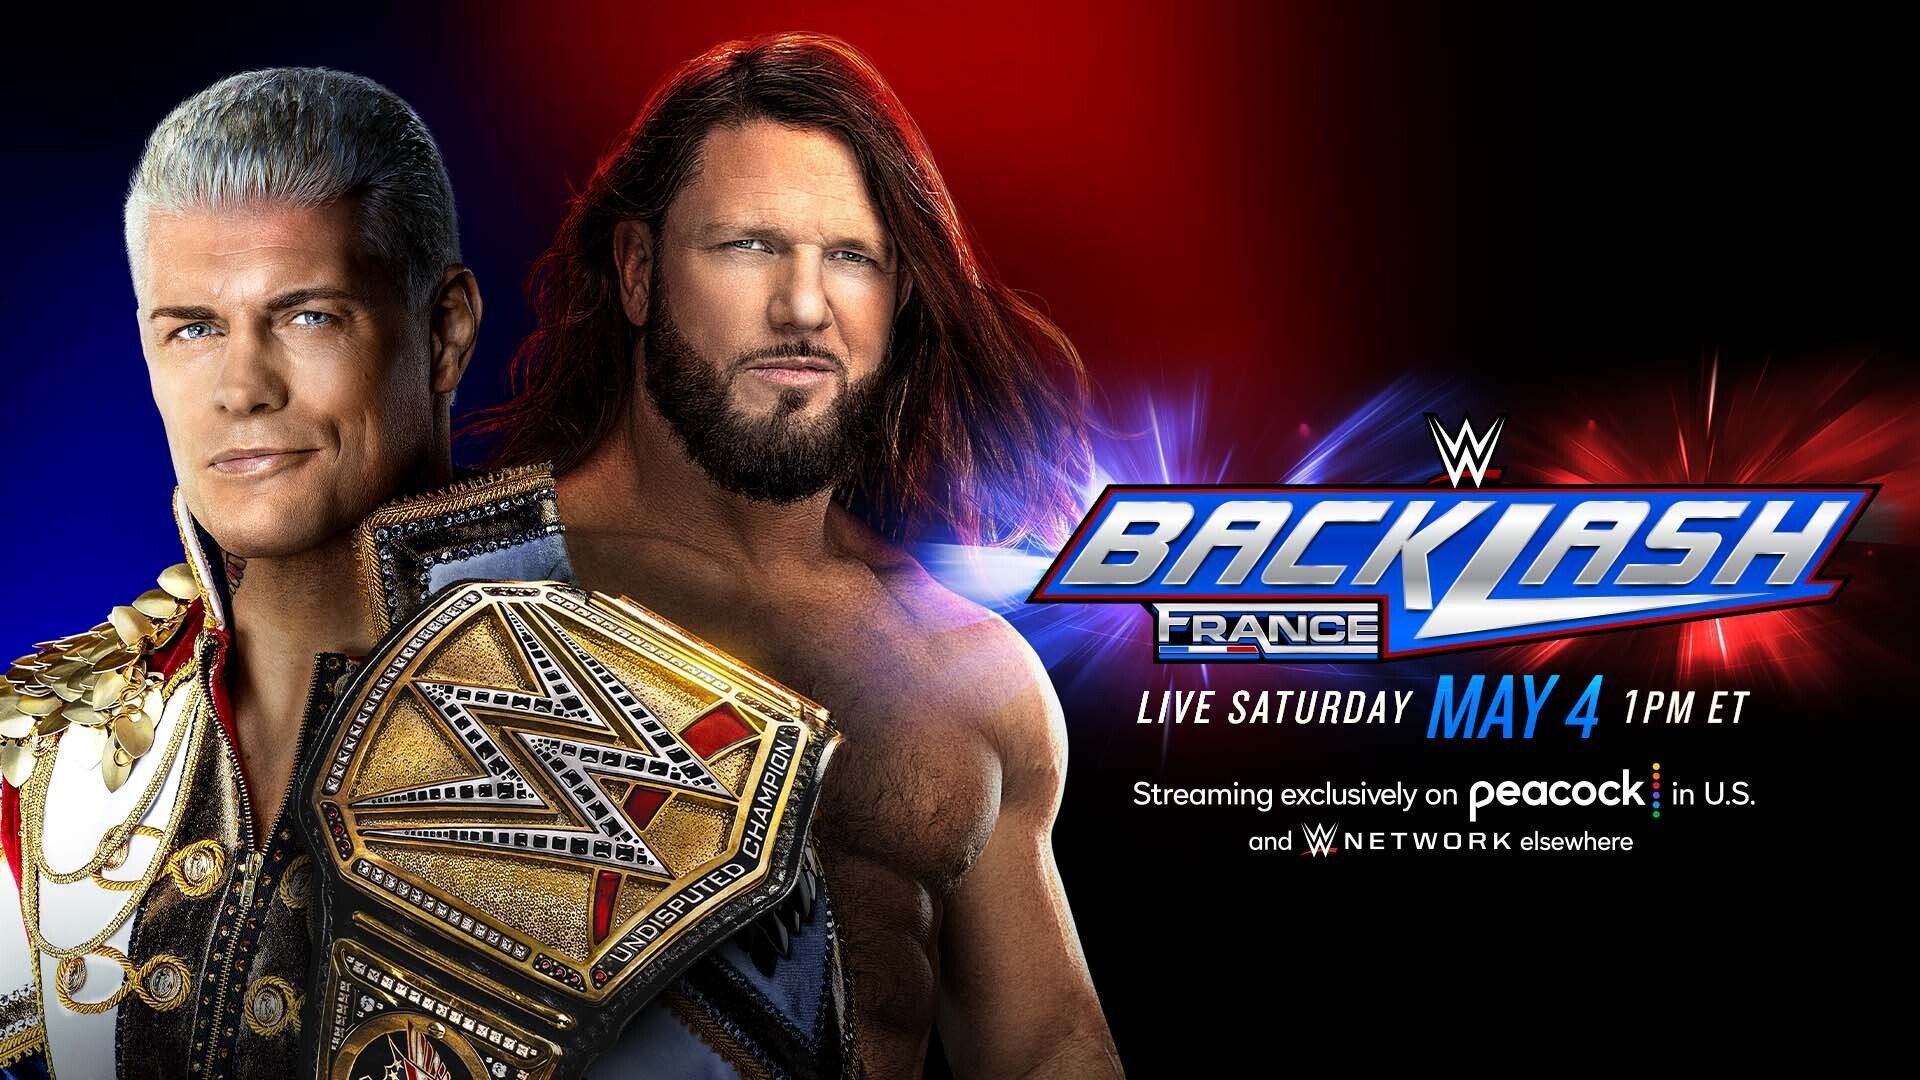 WWE Unveils Exclusive Information Regarding the Backlash France Superstore